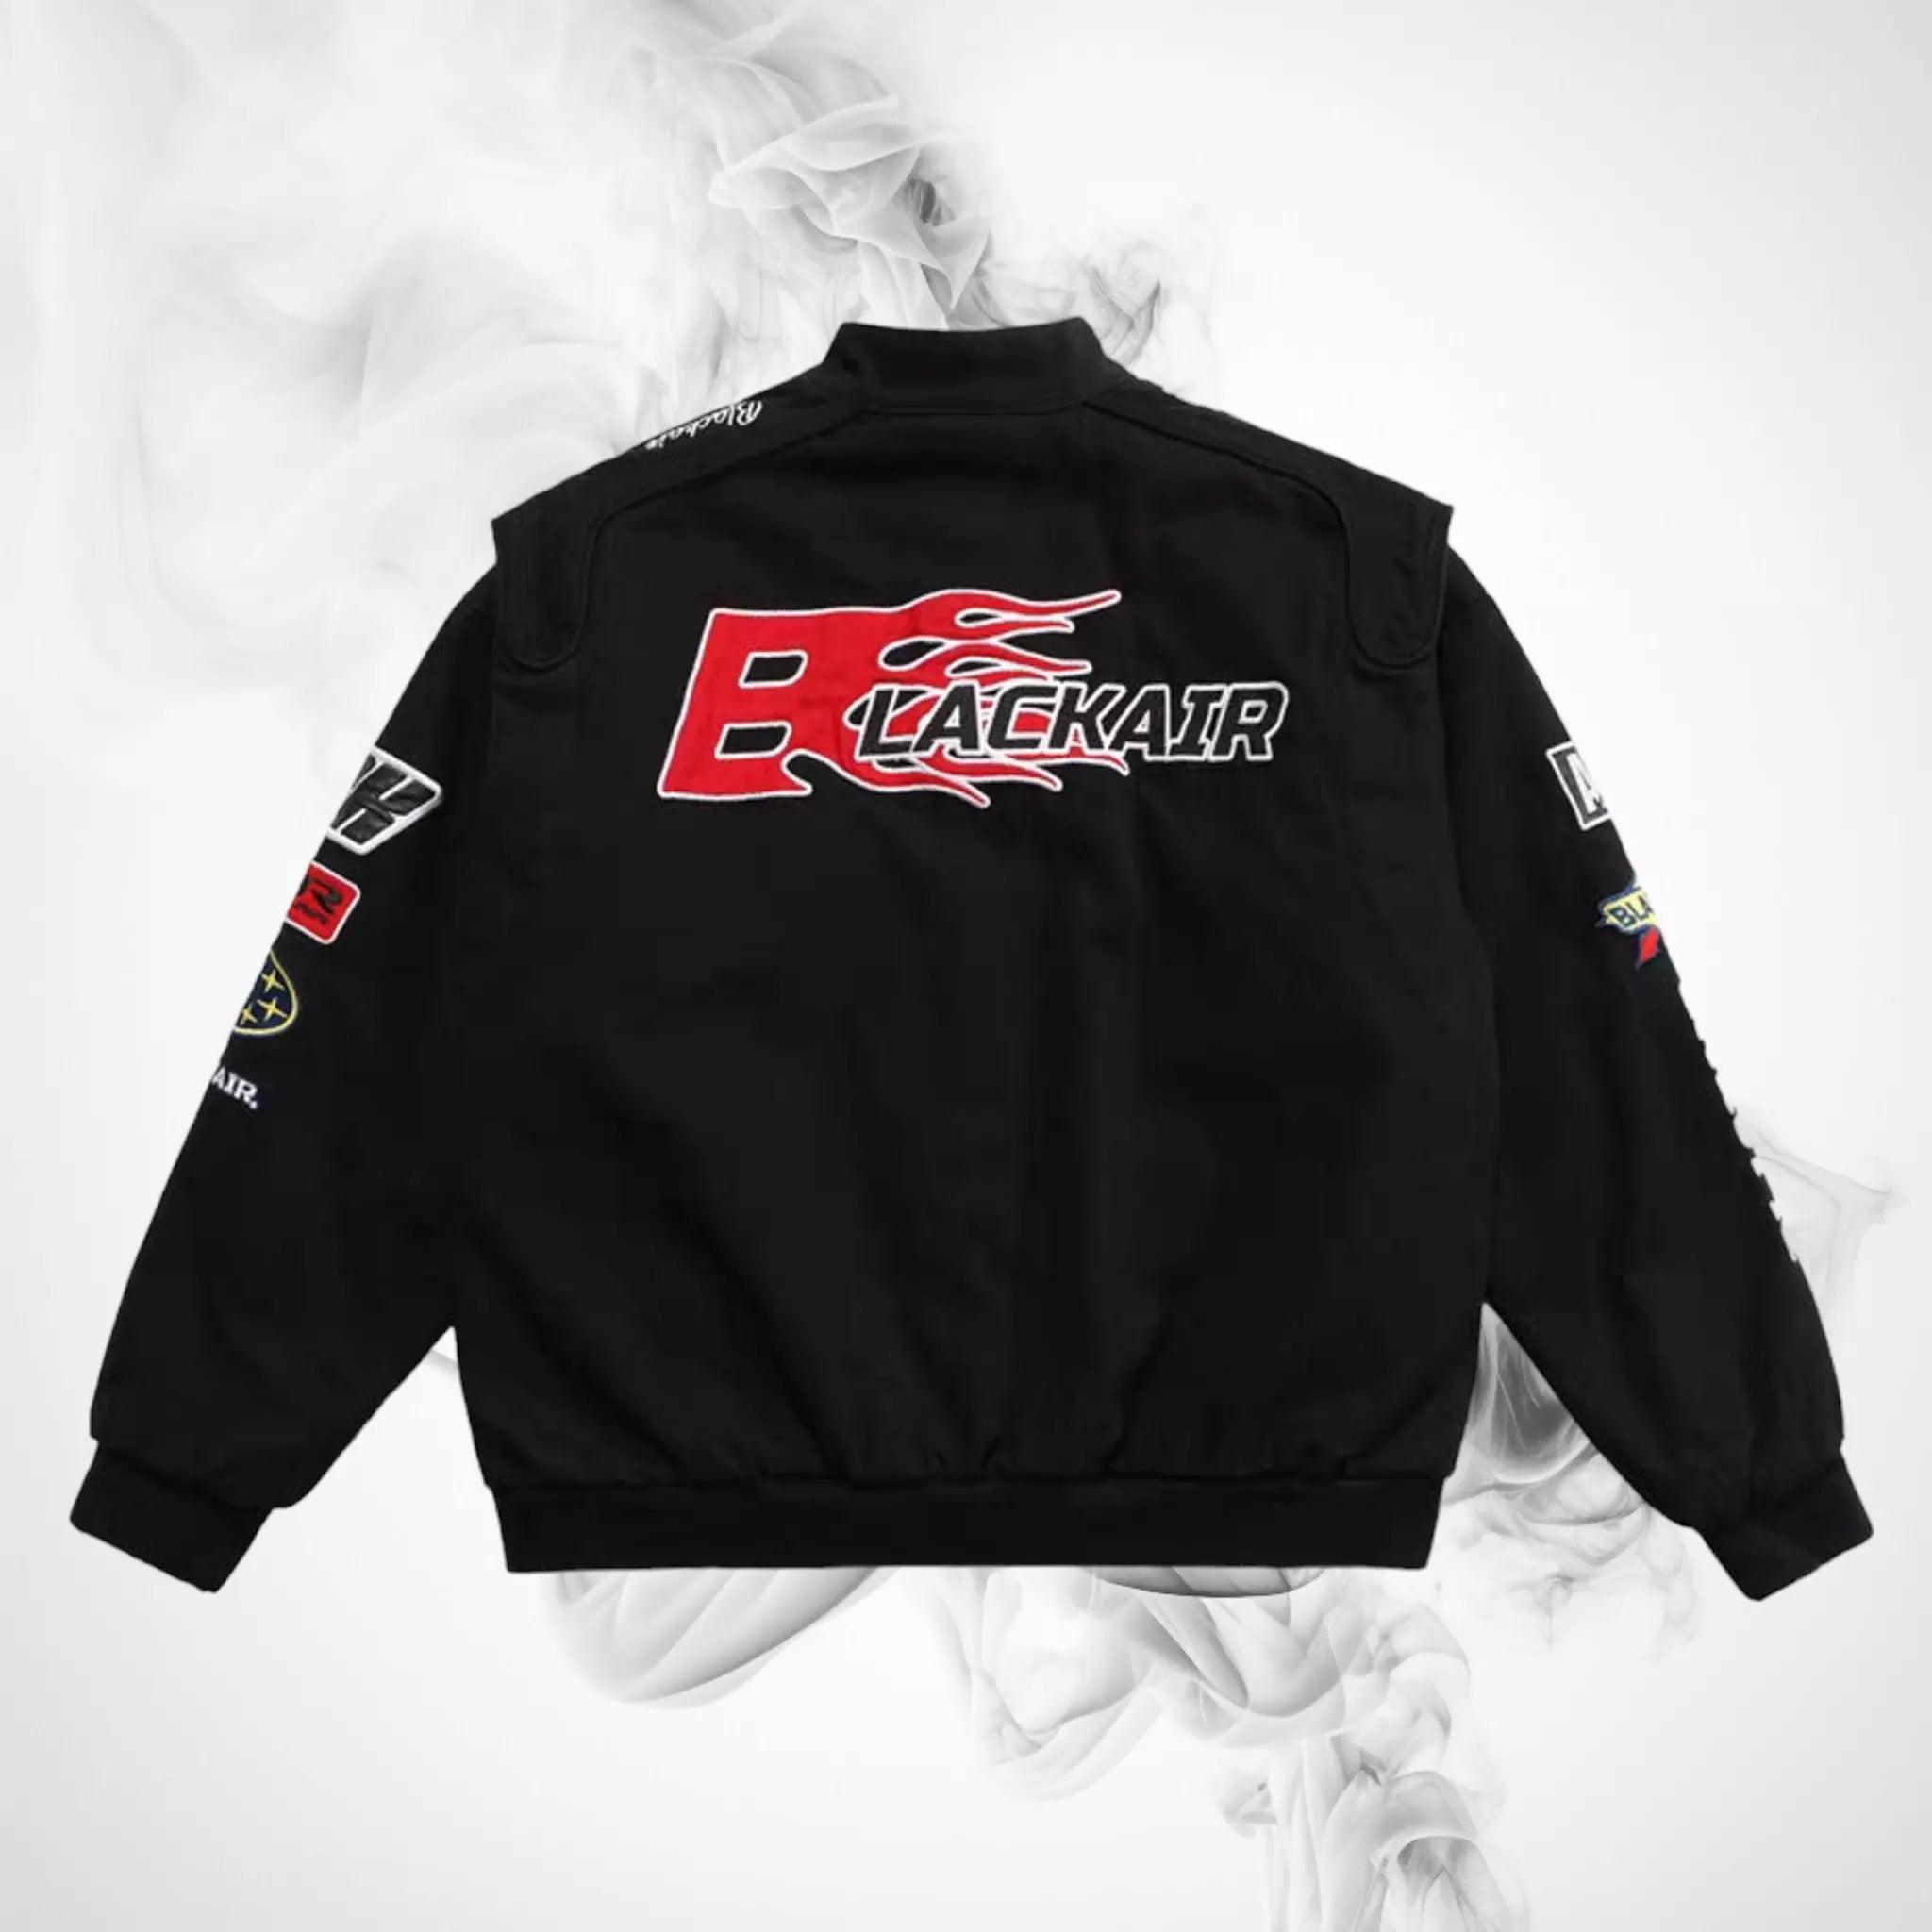 Blackair Racing Jacket Racing Jacket - Dash Racegear 